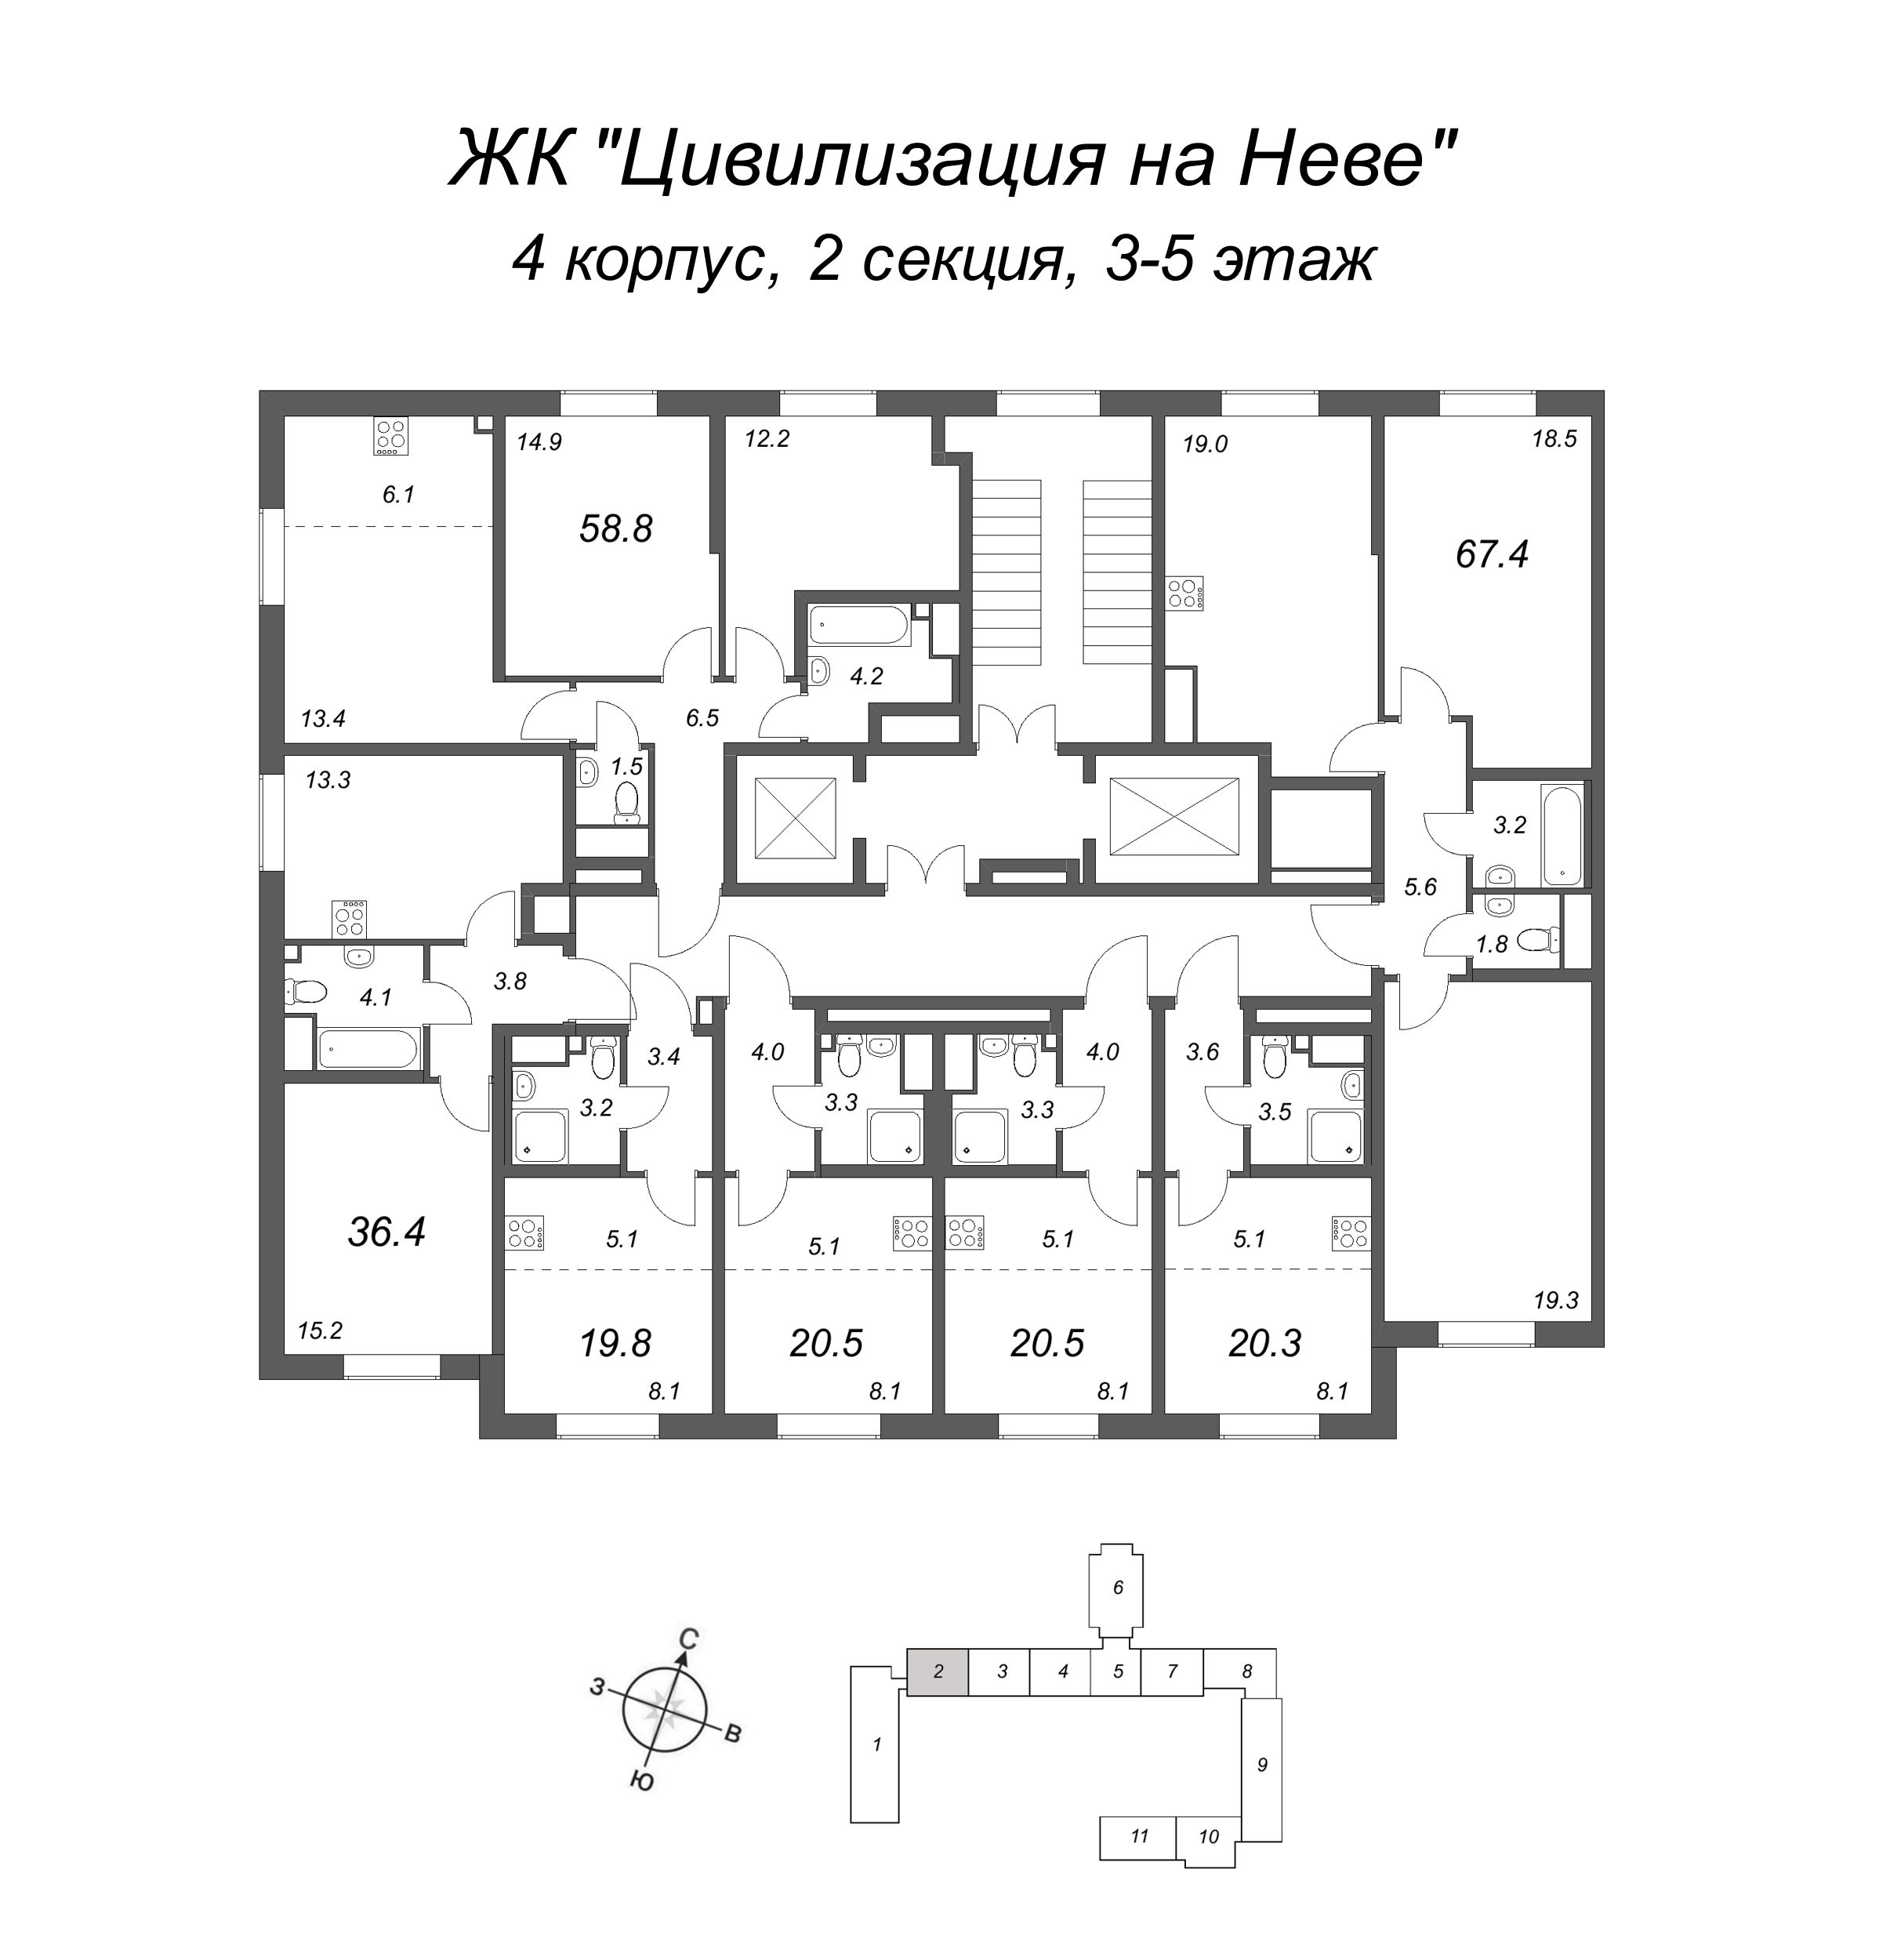 3-комнатная (Евро) квартира, 67.4 м² - планировка этажа